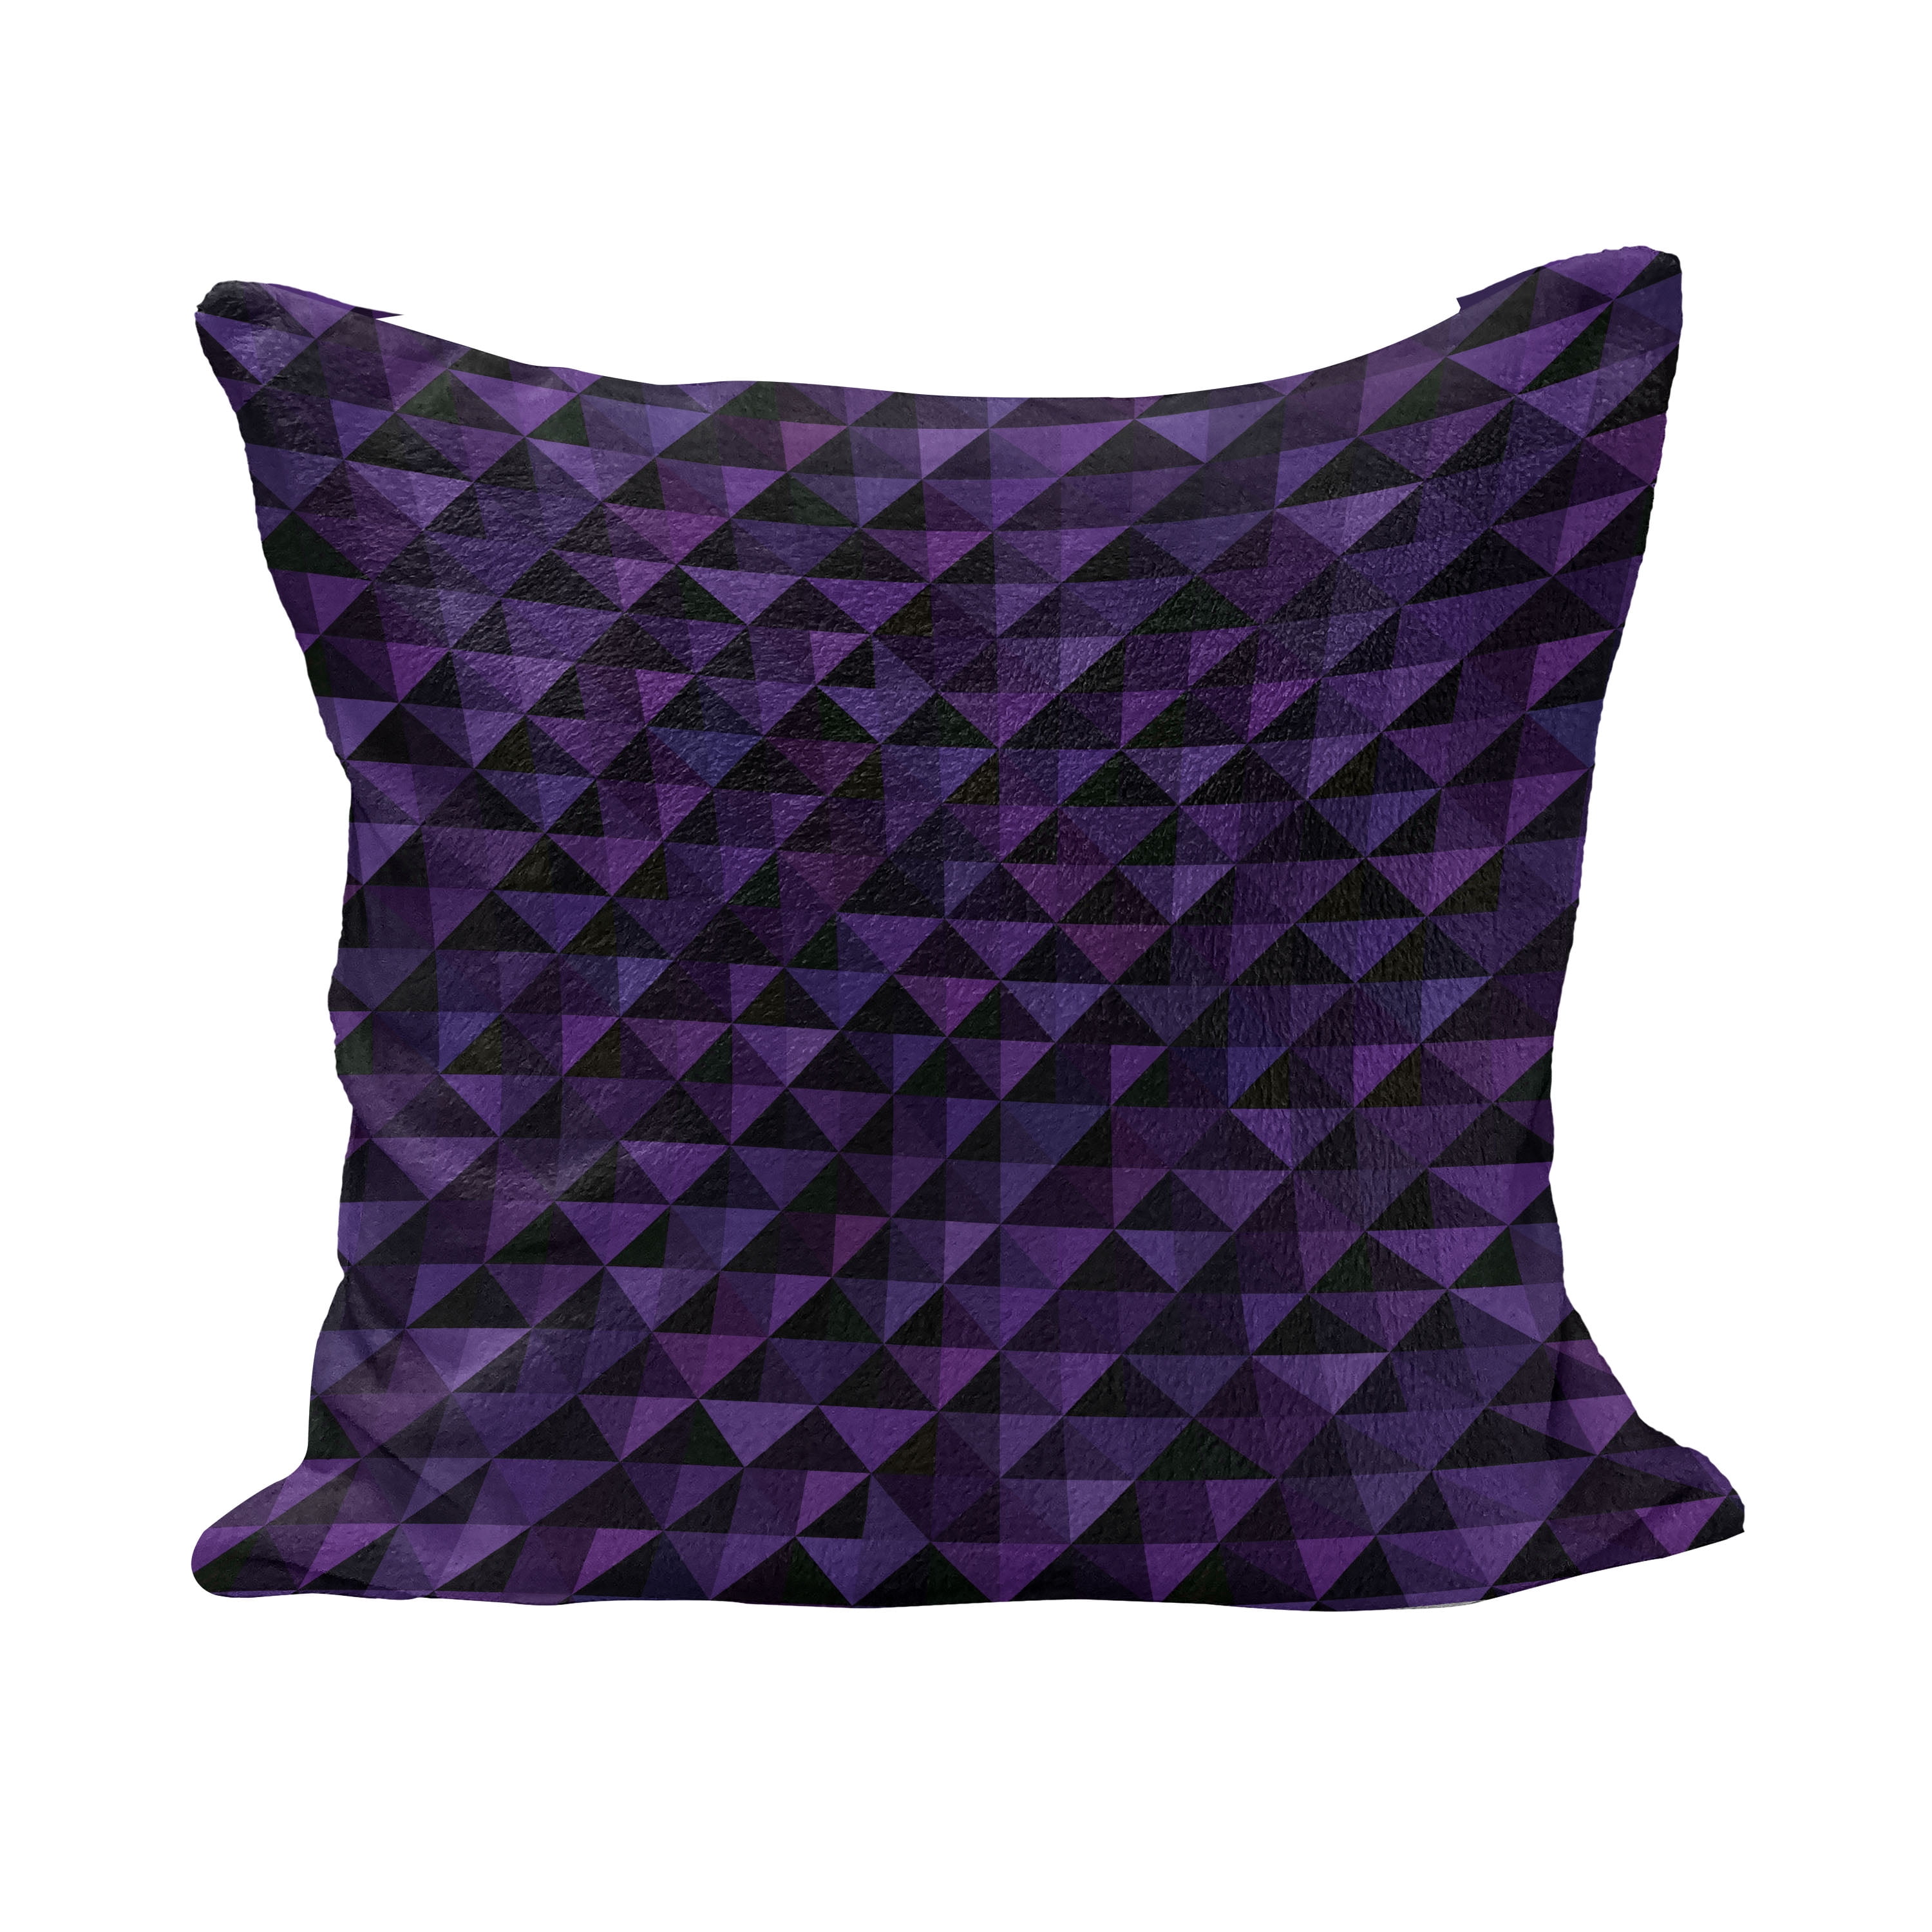 20" Sofa Seat Cushion Cover Thicken Cotton Linen Geometric Embroidery Pillowcase 